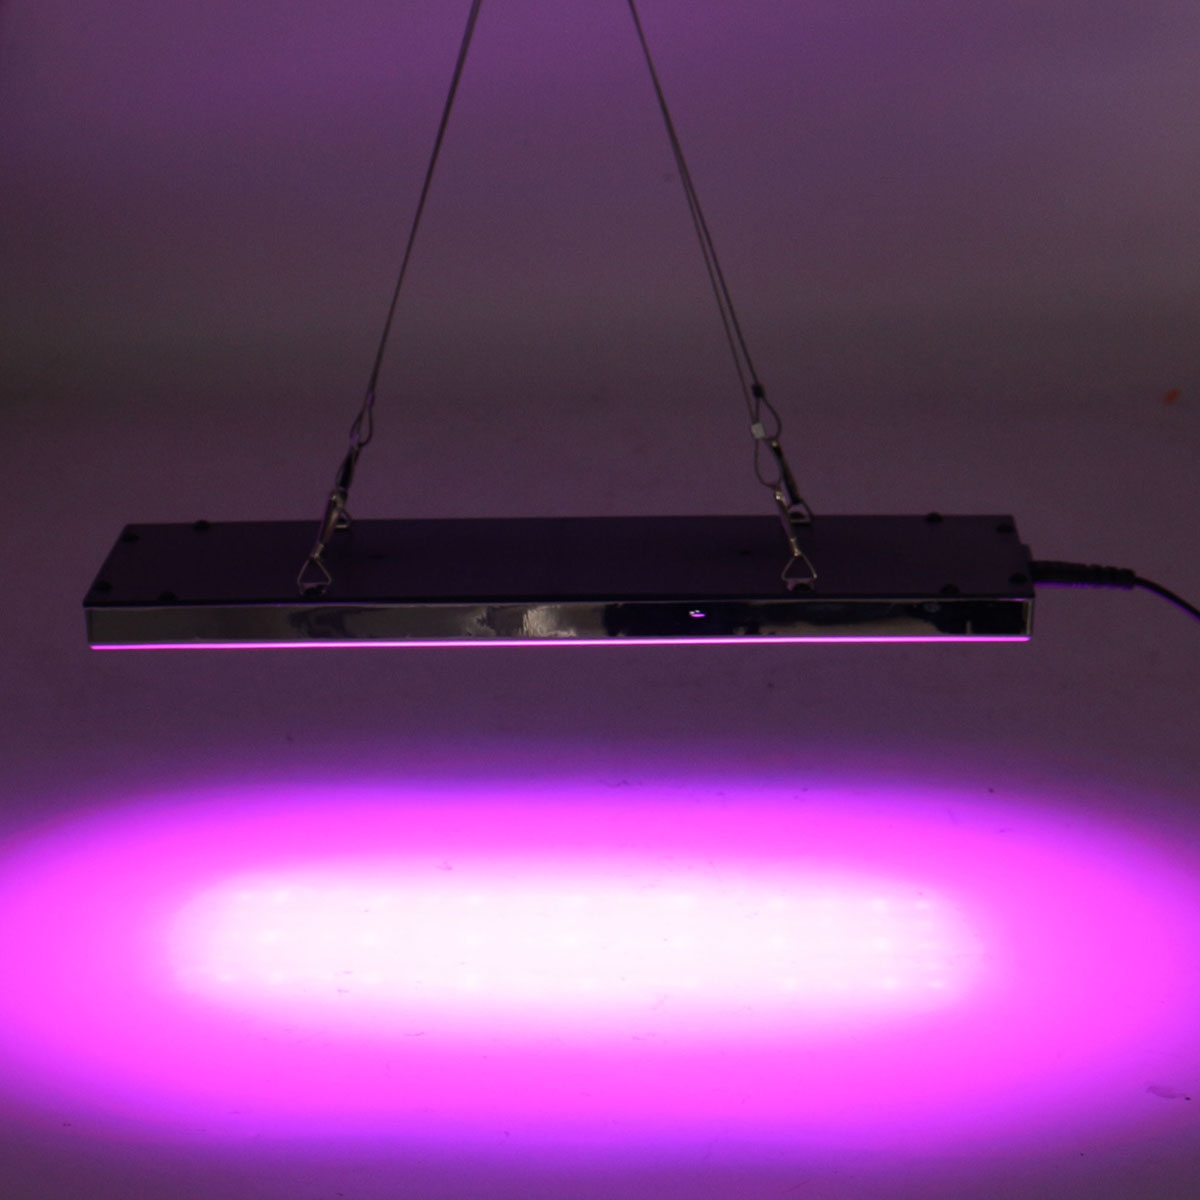 800W-LED-Grow-Light-Full-Spectrum-Growing-Plant-Lamp-For-Hydroponics-Veg-Indoor-1807202-8